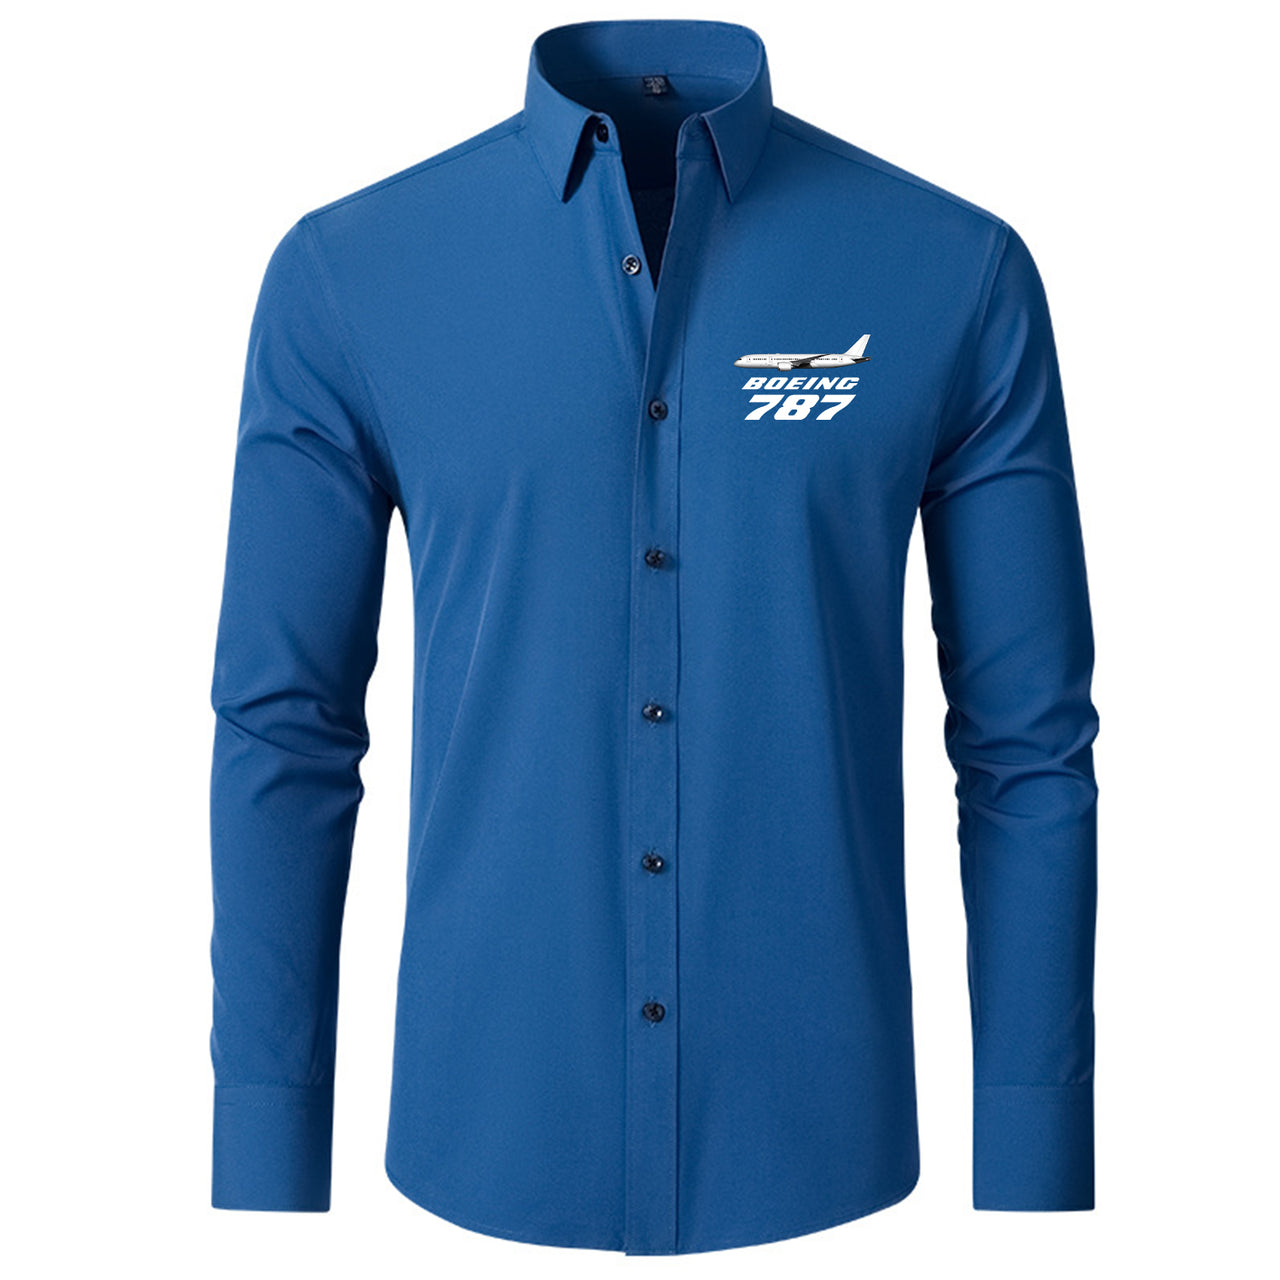 The Boeing 787 Designed Long Sleeve Shirts